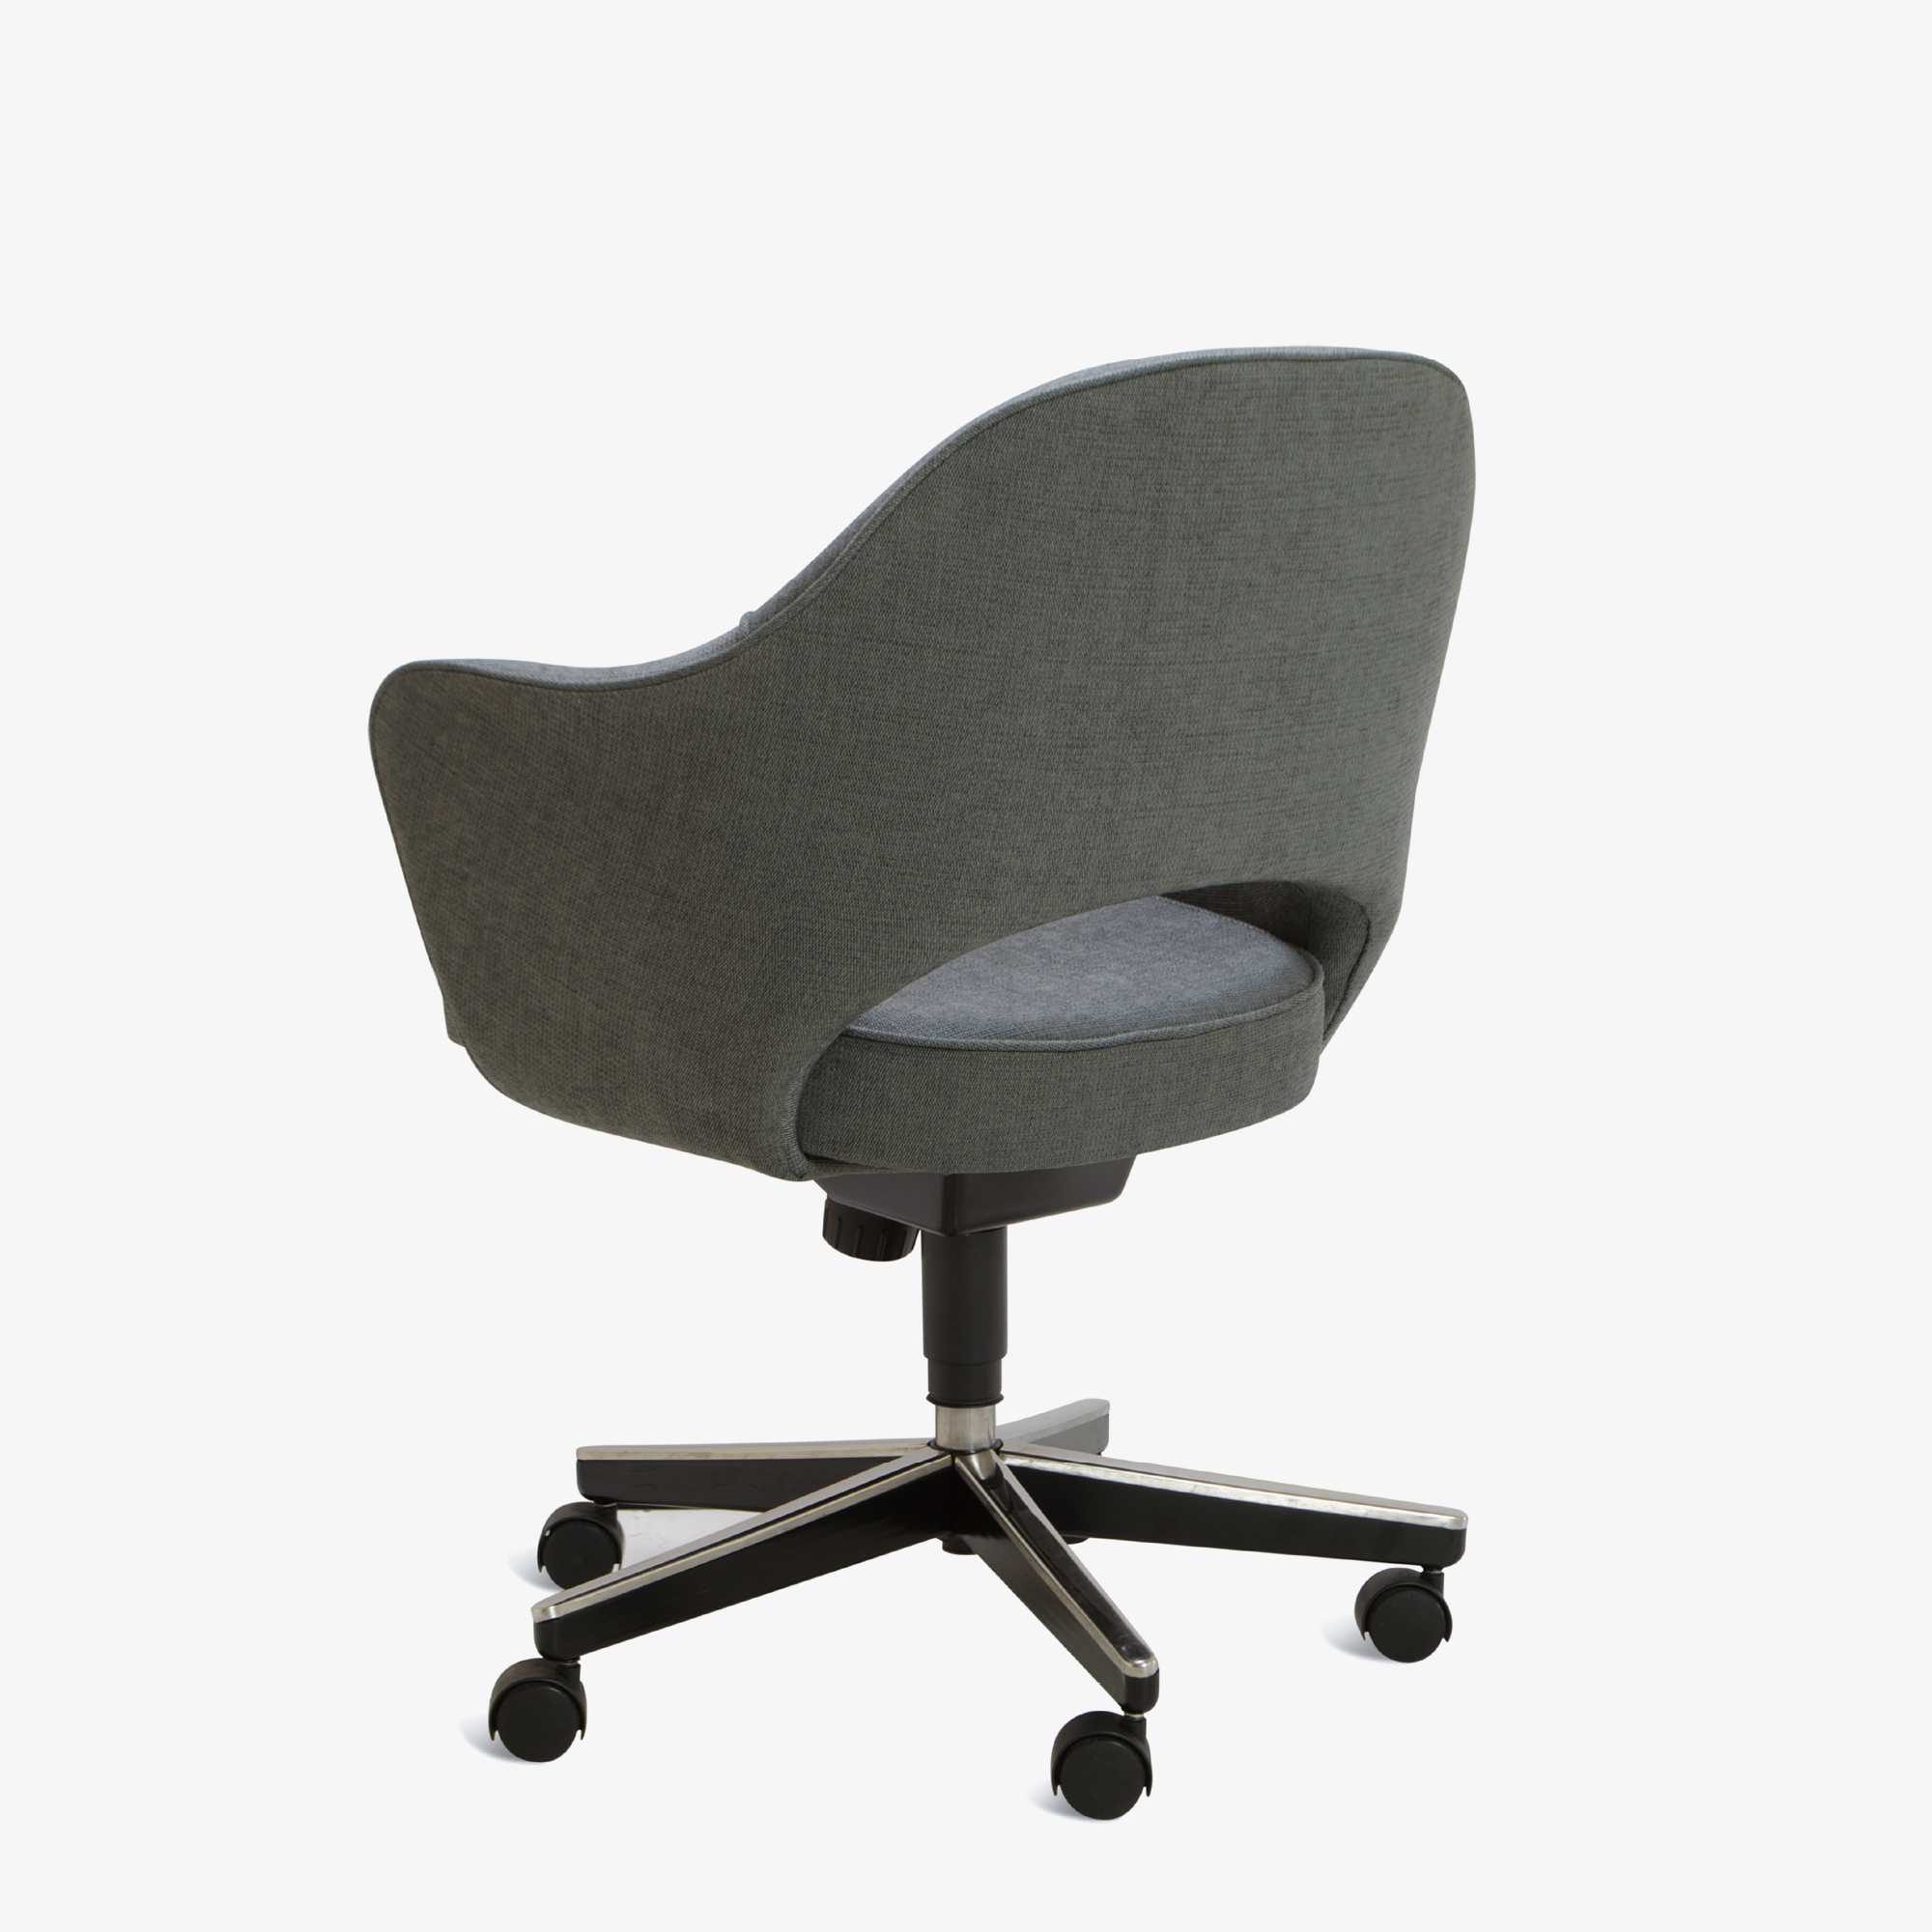 Knoll Saarinen Executive Arm Chair in Fabric, Swivel Base